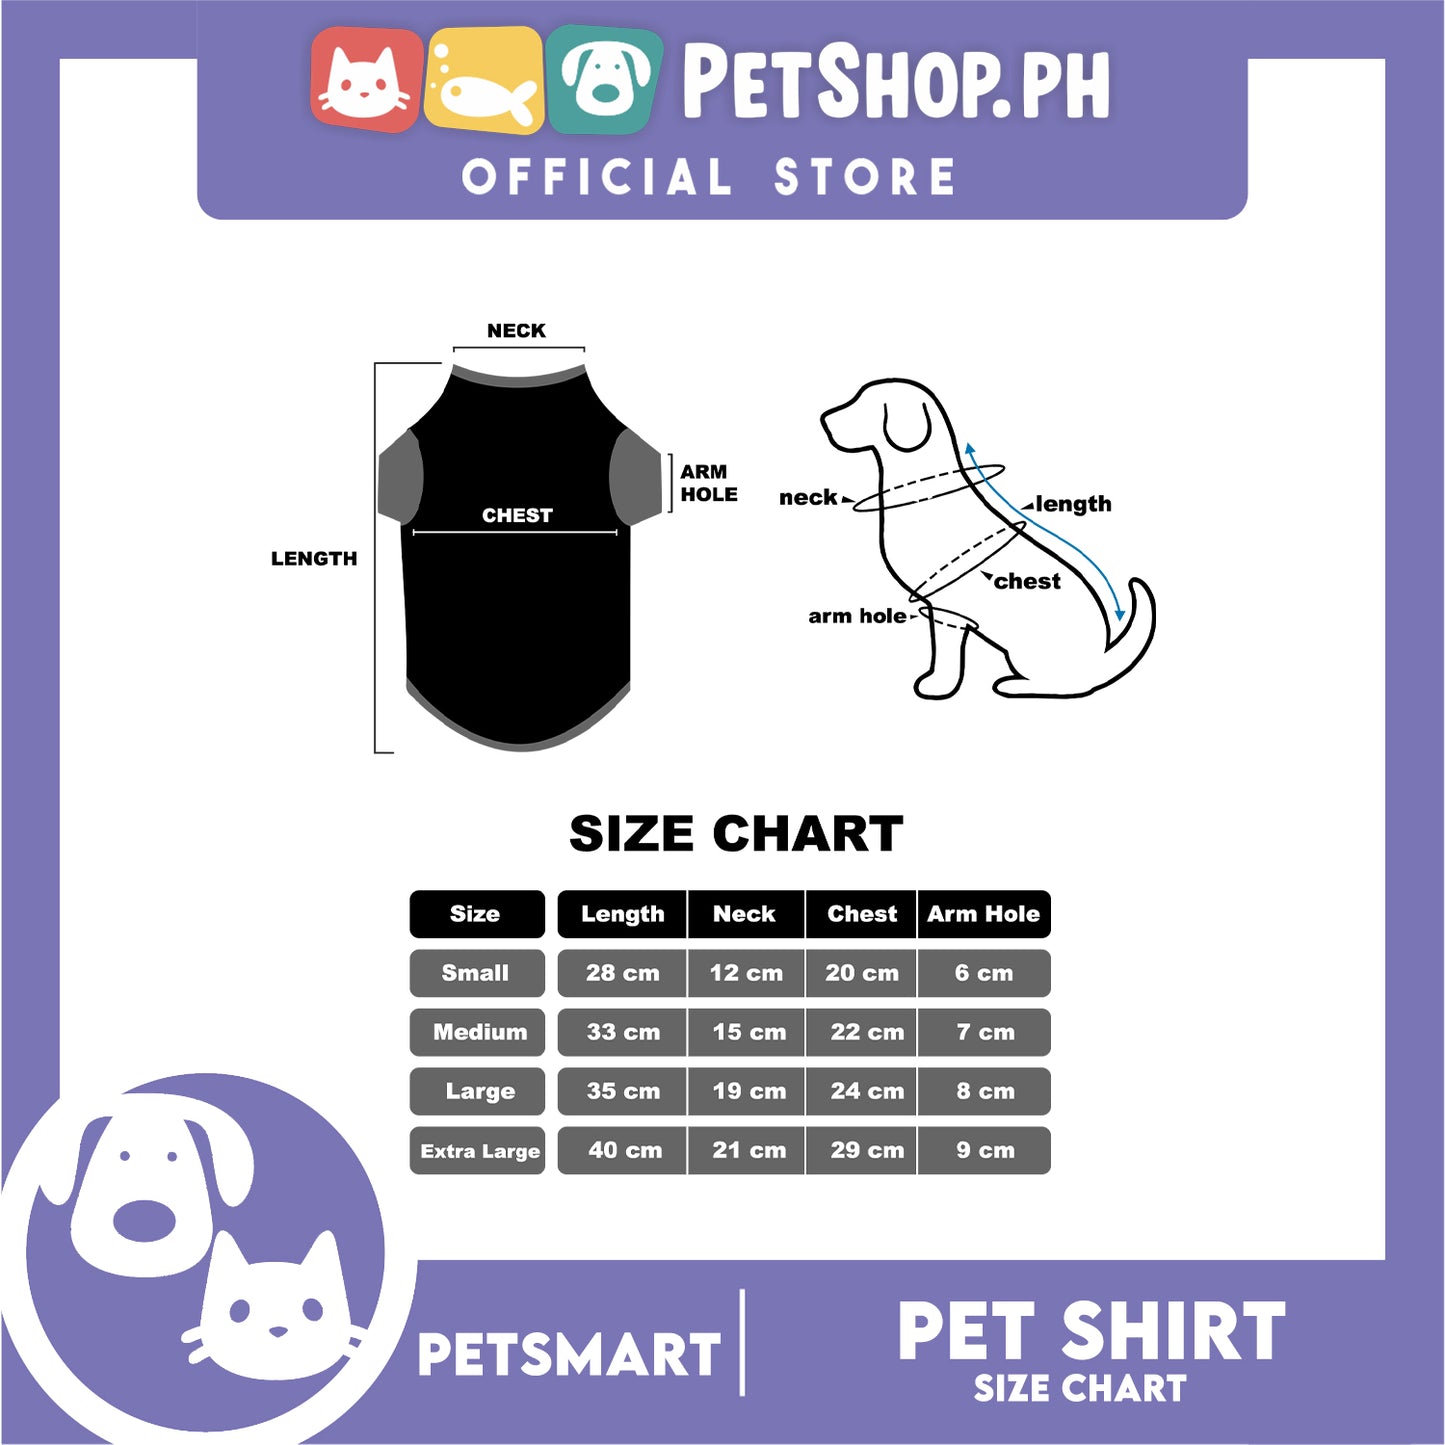 Pet Shirt Comic Design, Small Size (DG-CTN210S)